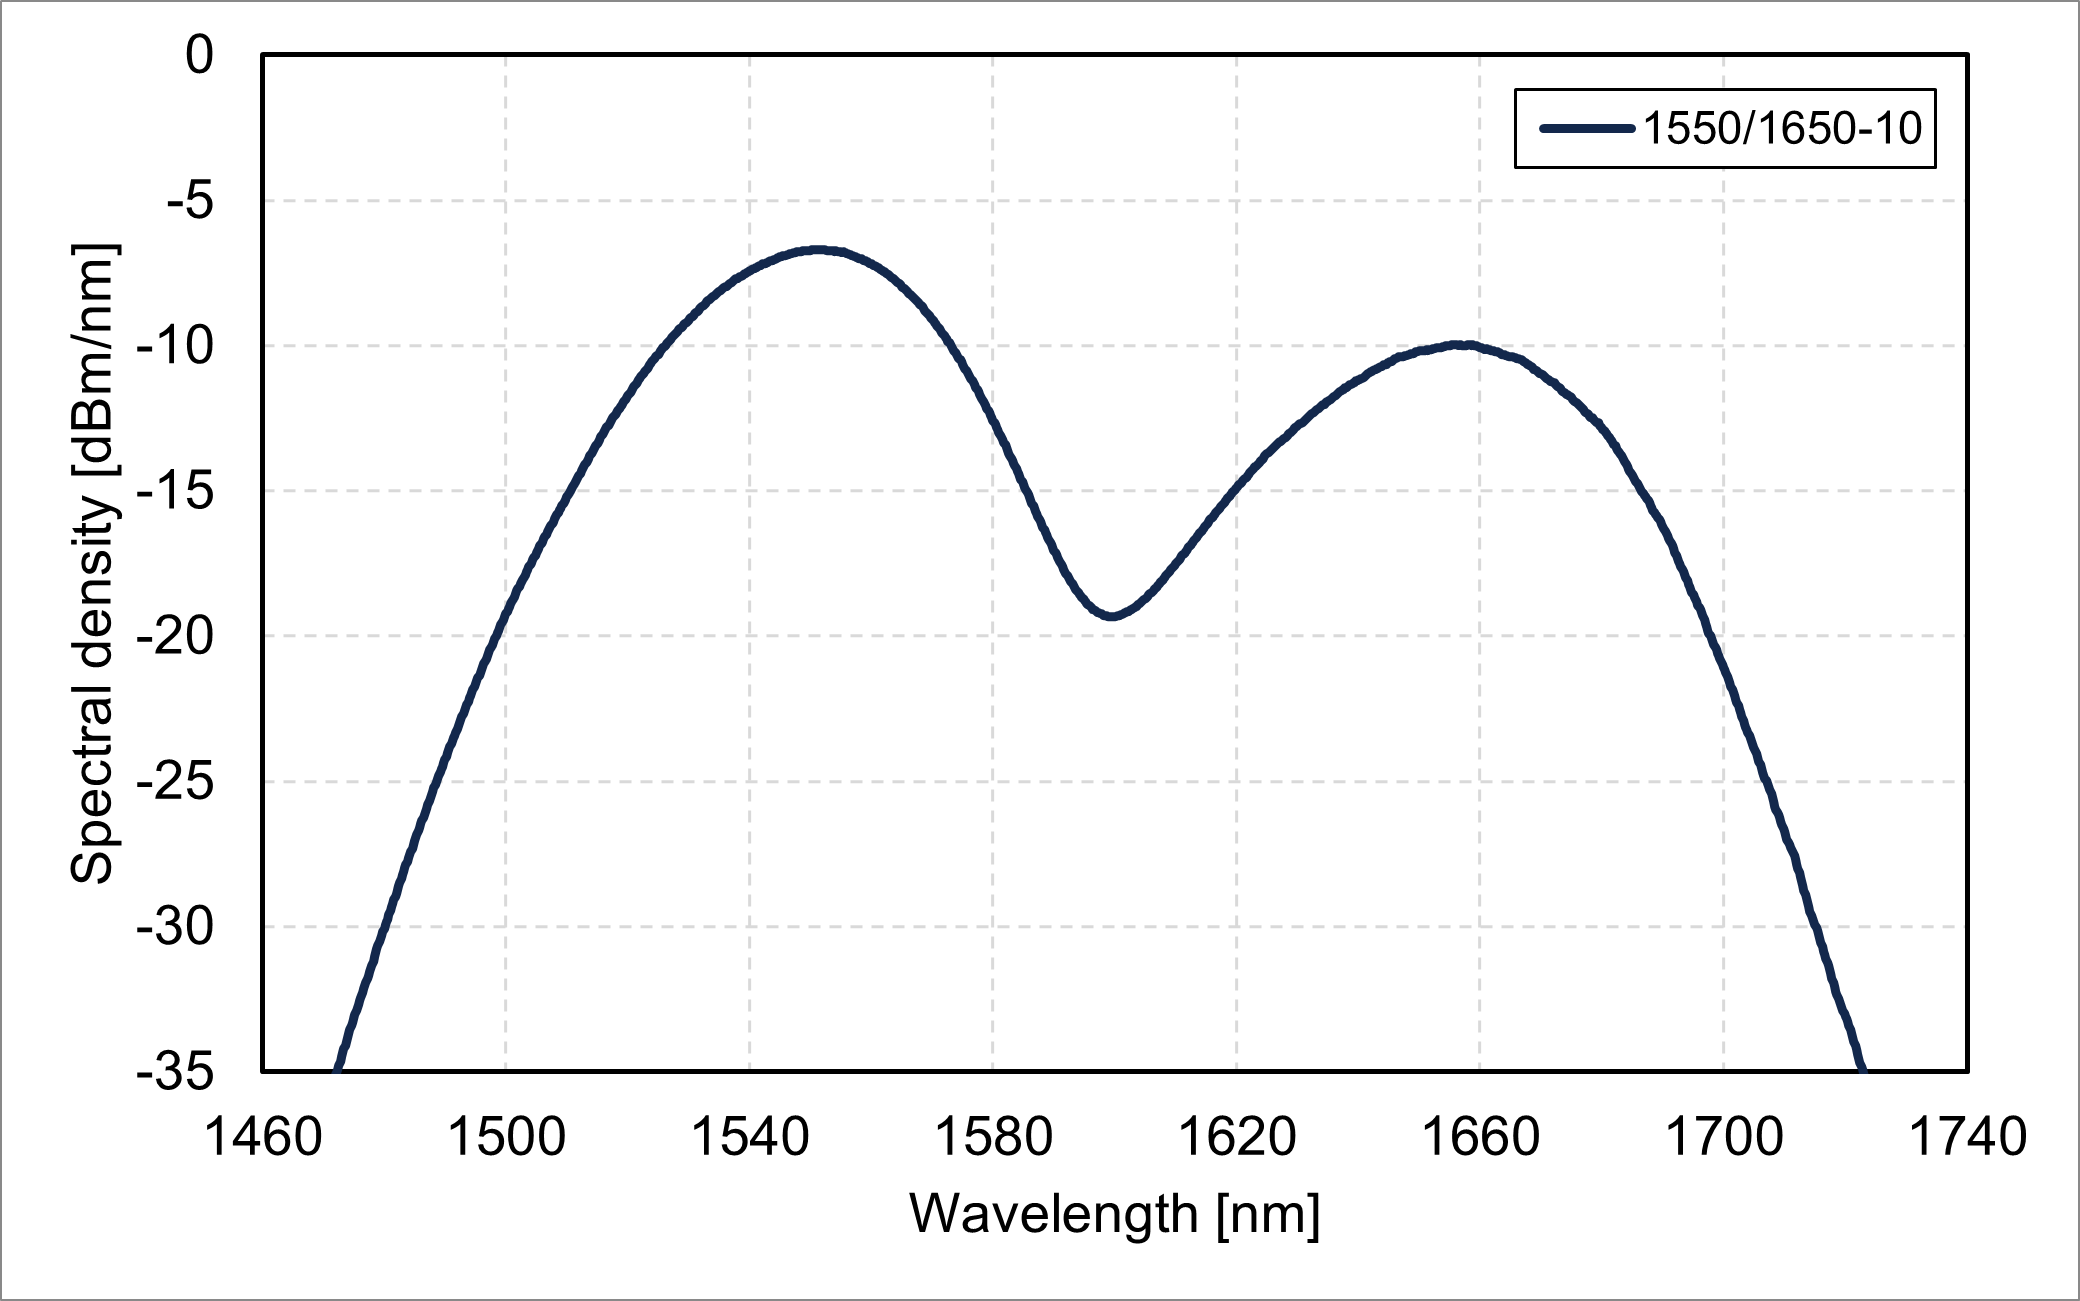 Spectral density vs. wavelength (1550/1650-10)